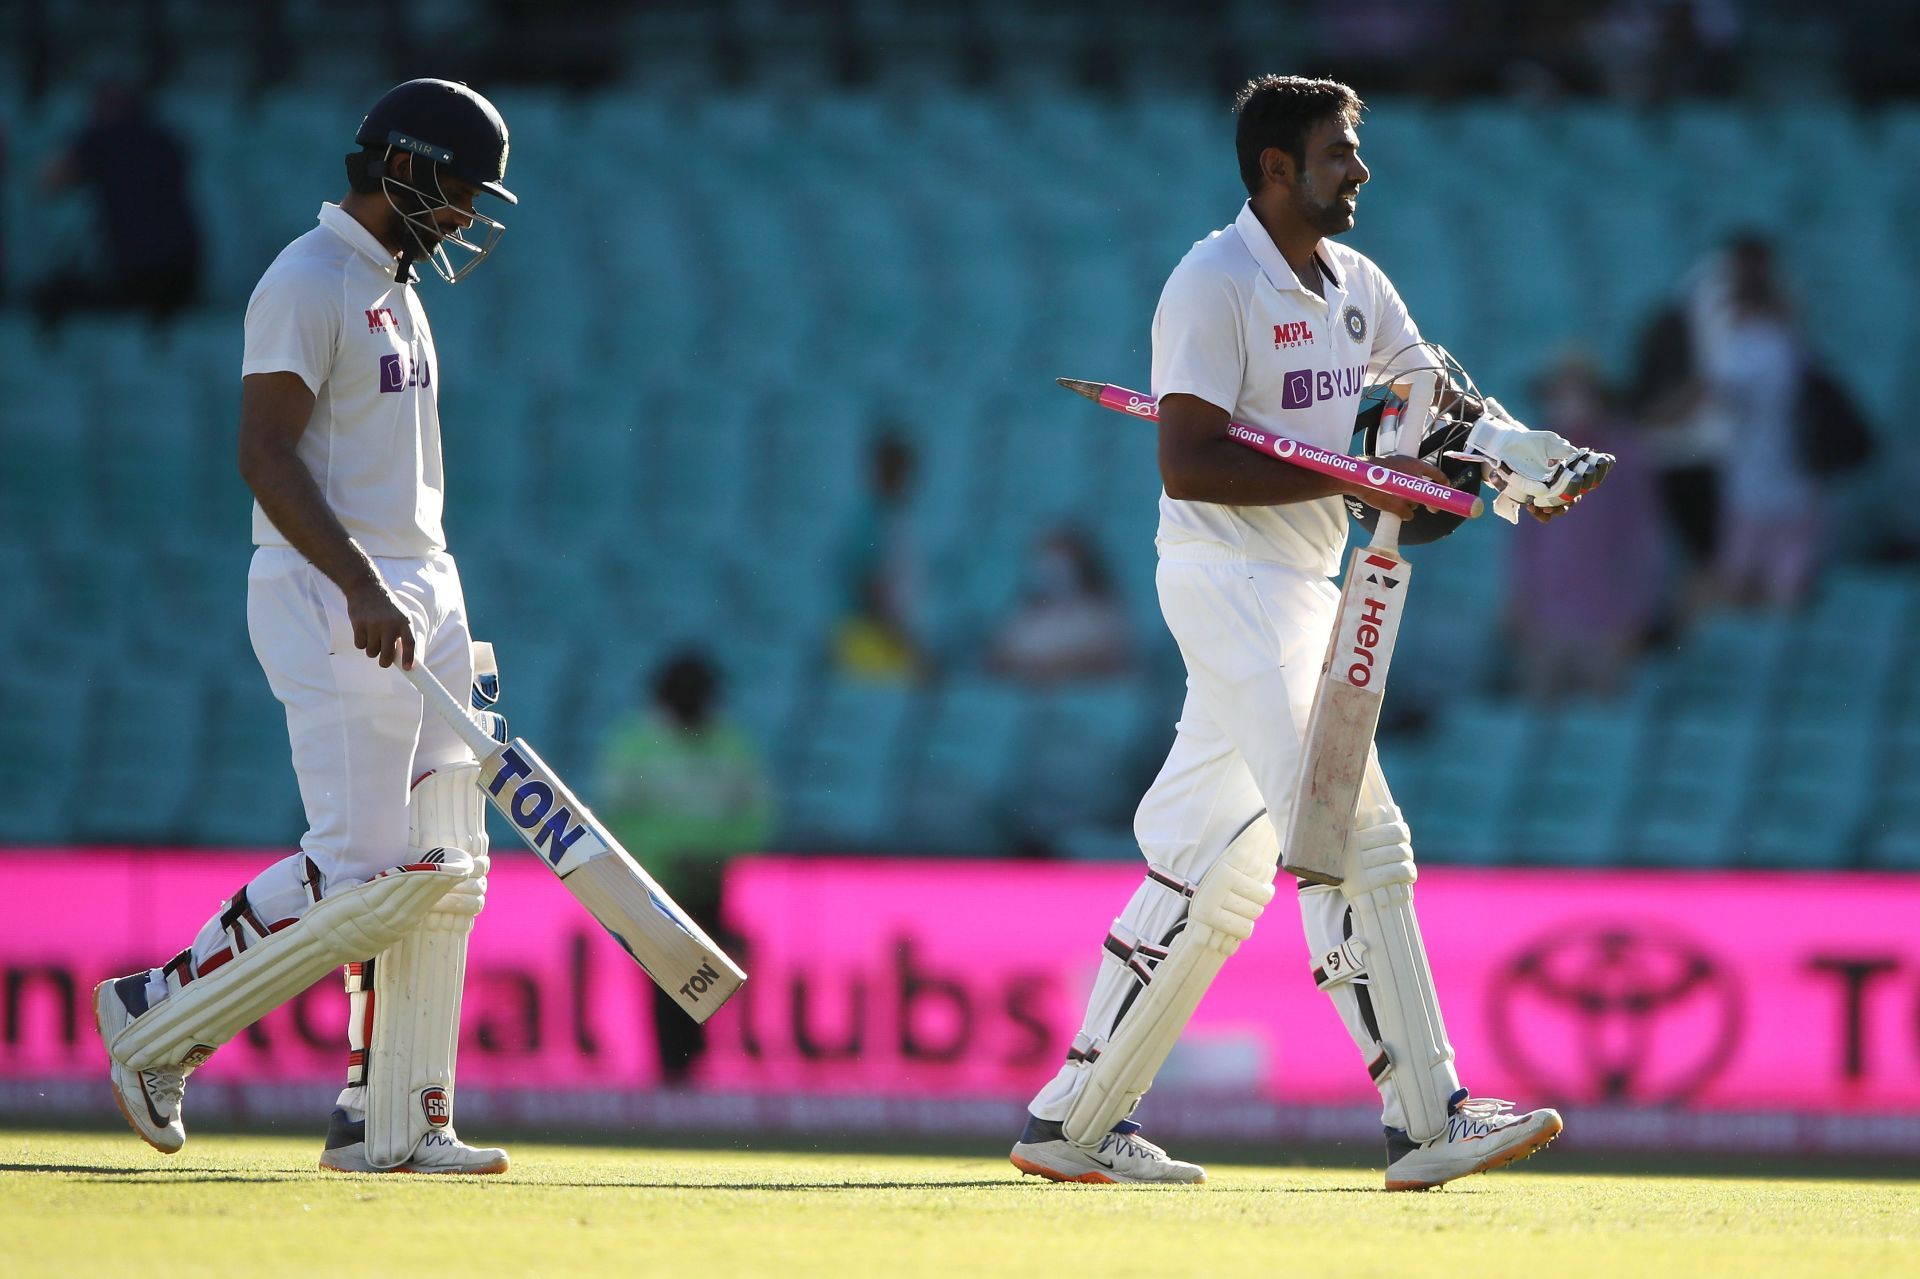 Ravichandran Ashwin and Hanuma Vihari batted through injury to defy Australia at the SCG